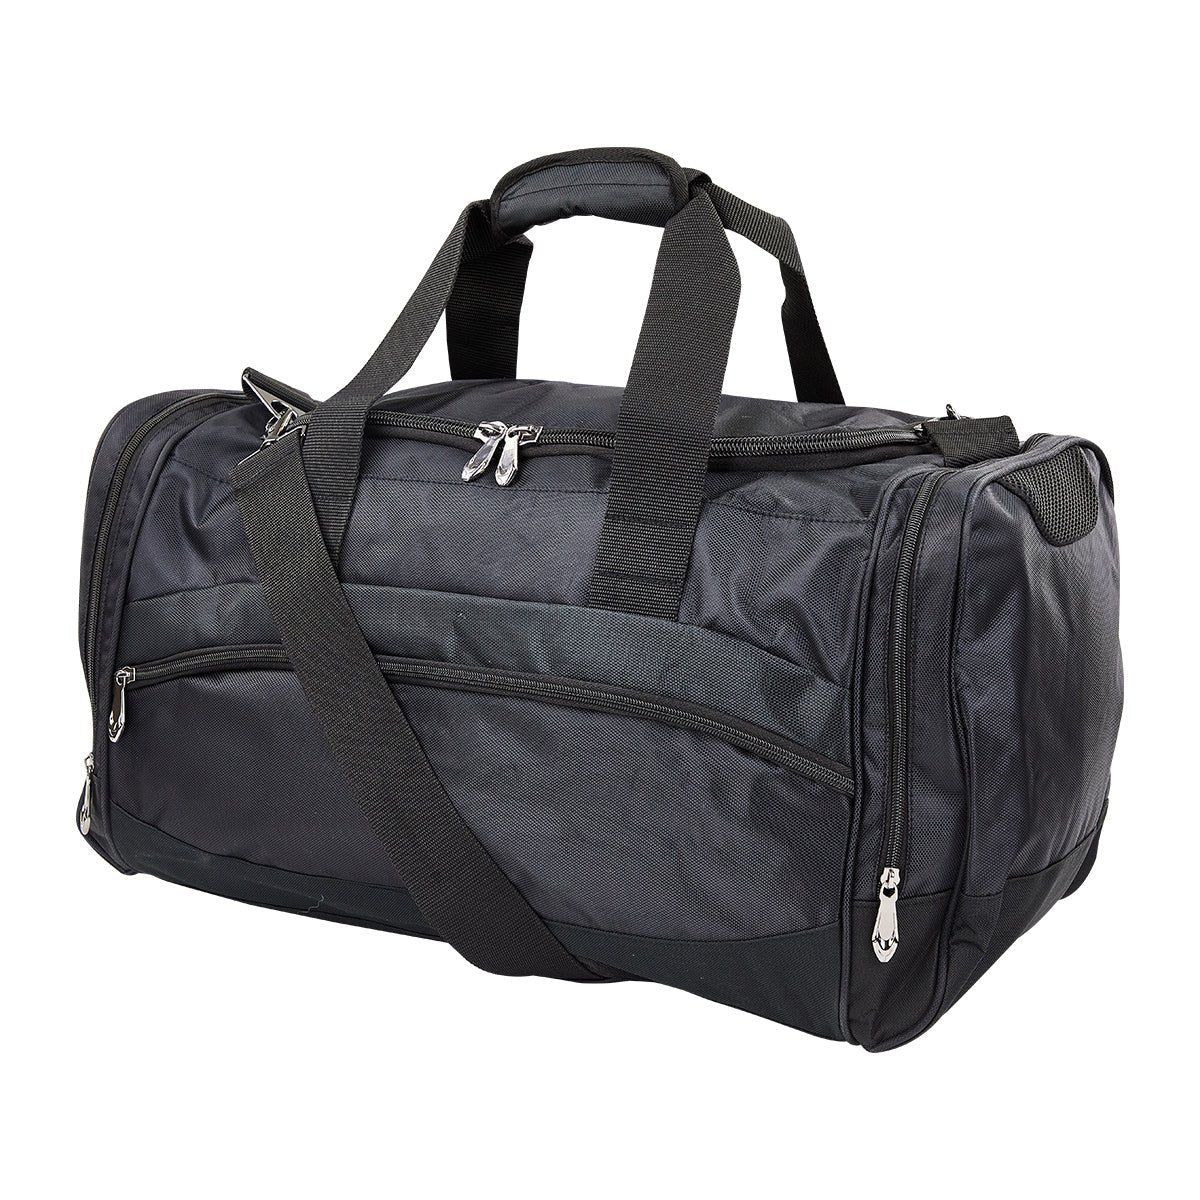 Premium Sport Bag - Extra Large Extra Large Black